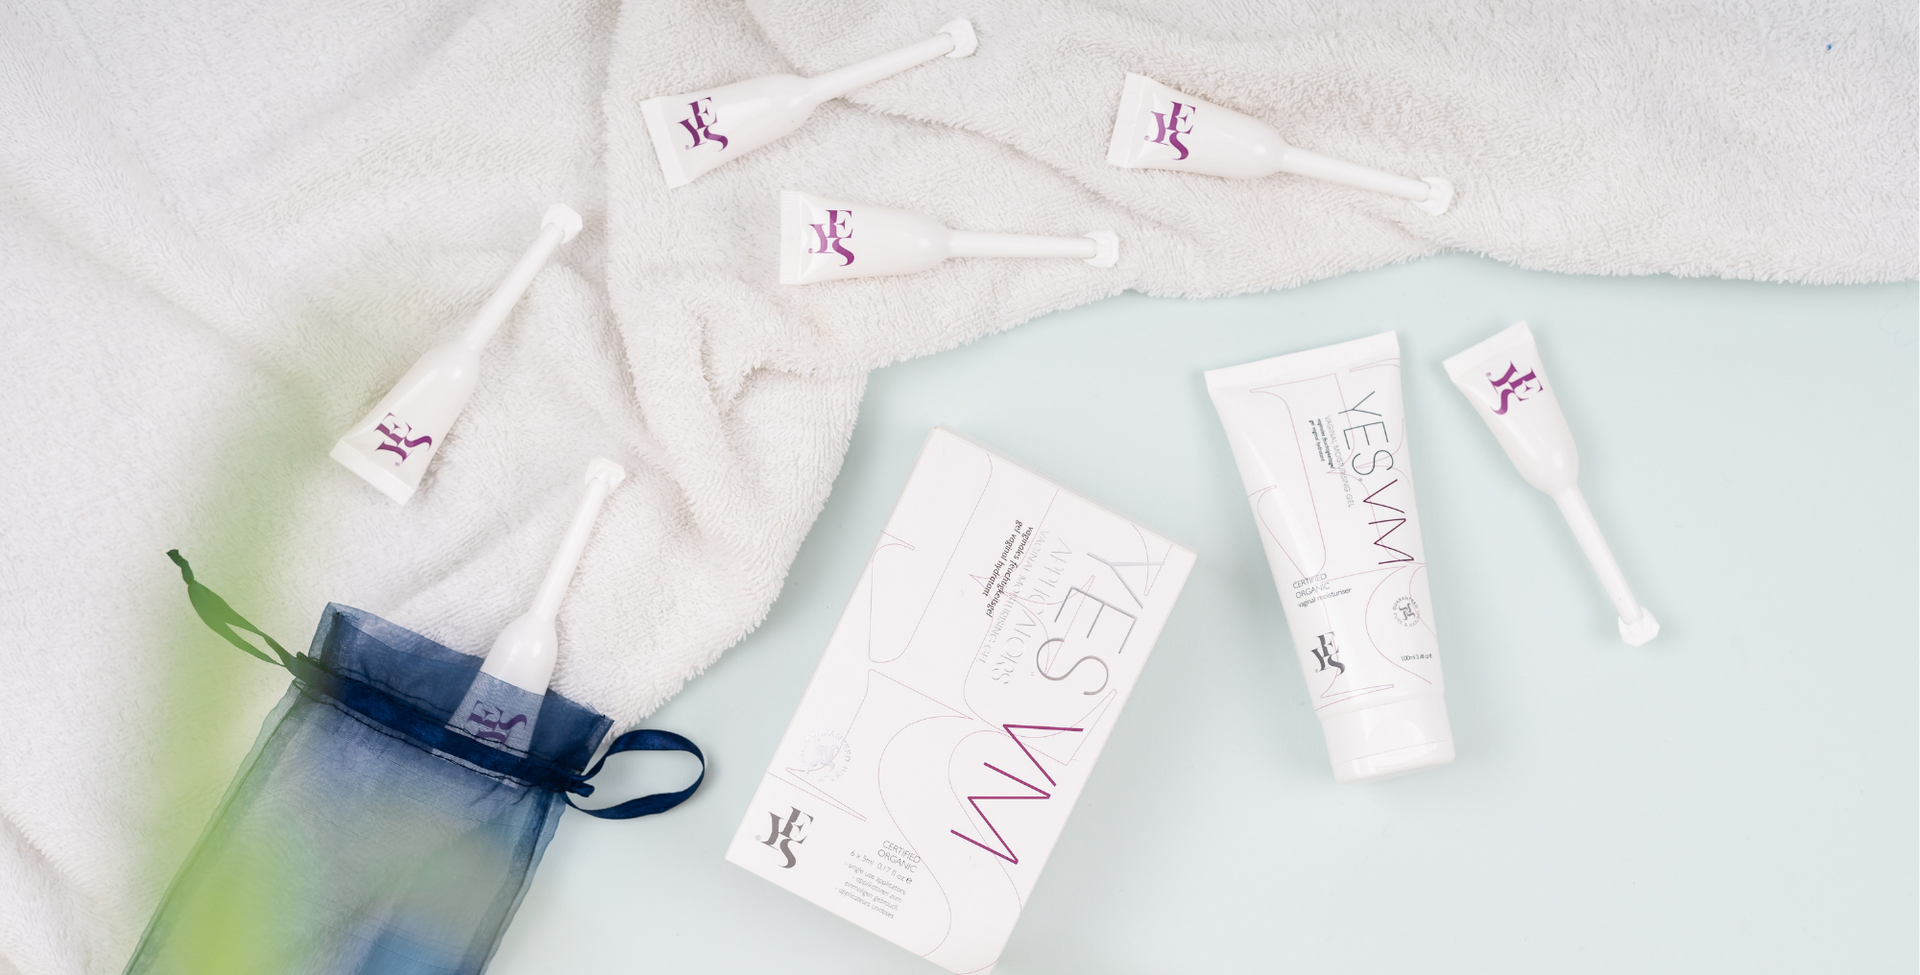 product image of yes vaginal moisturising gel